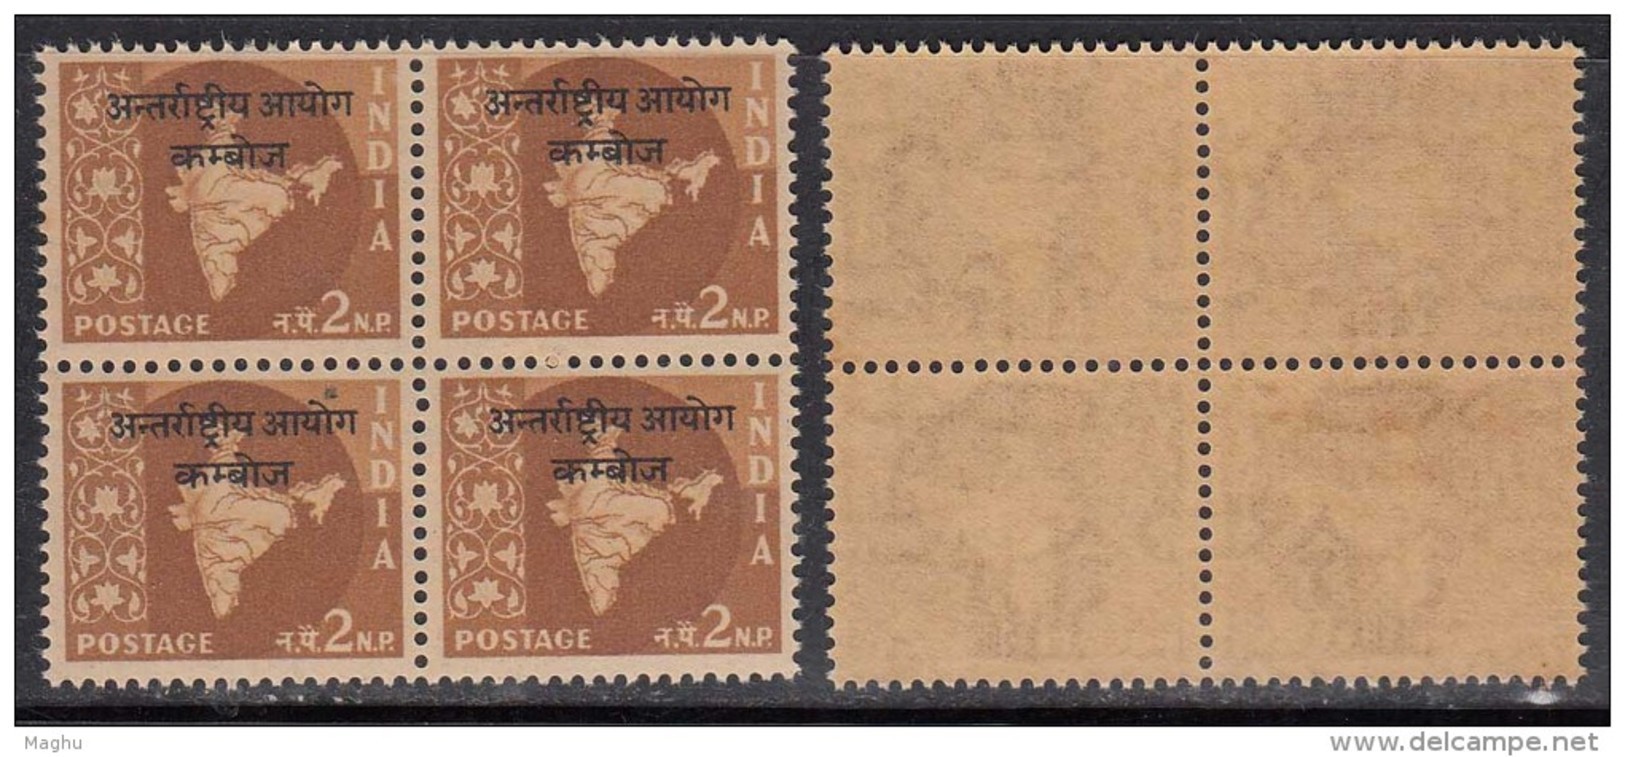 India MNH 1962, Ovpt. Cambodia On 2np Map Series, Ashokan Watermark, Block Of 4, - Militaire Vrijstelling Van Portkosten